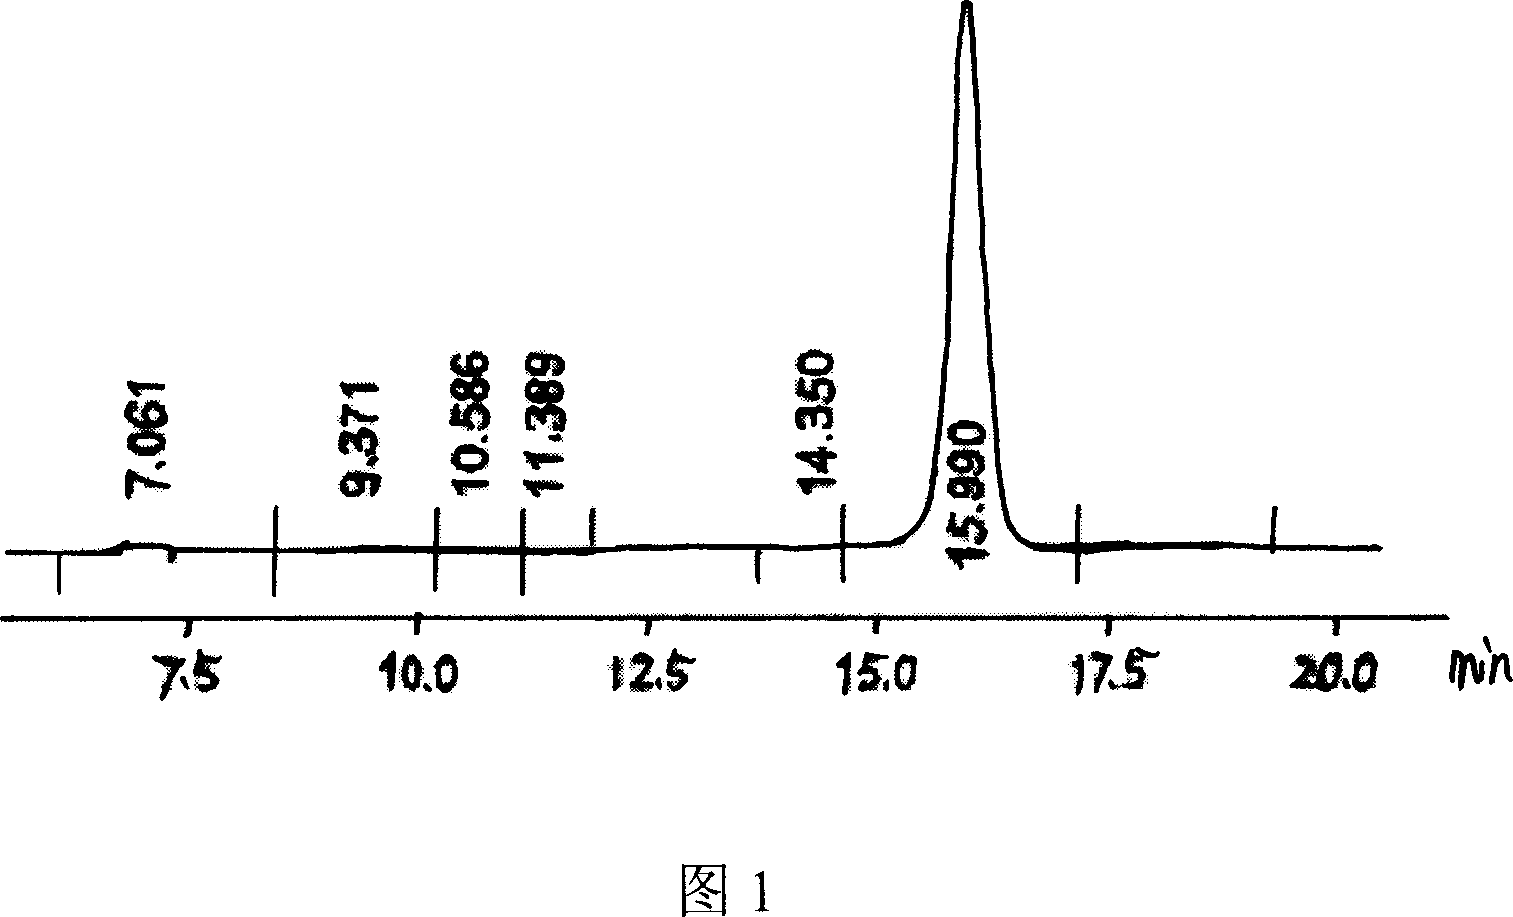 Process for preparing 6 alpha-methyl hydroprednisone